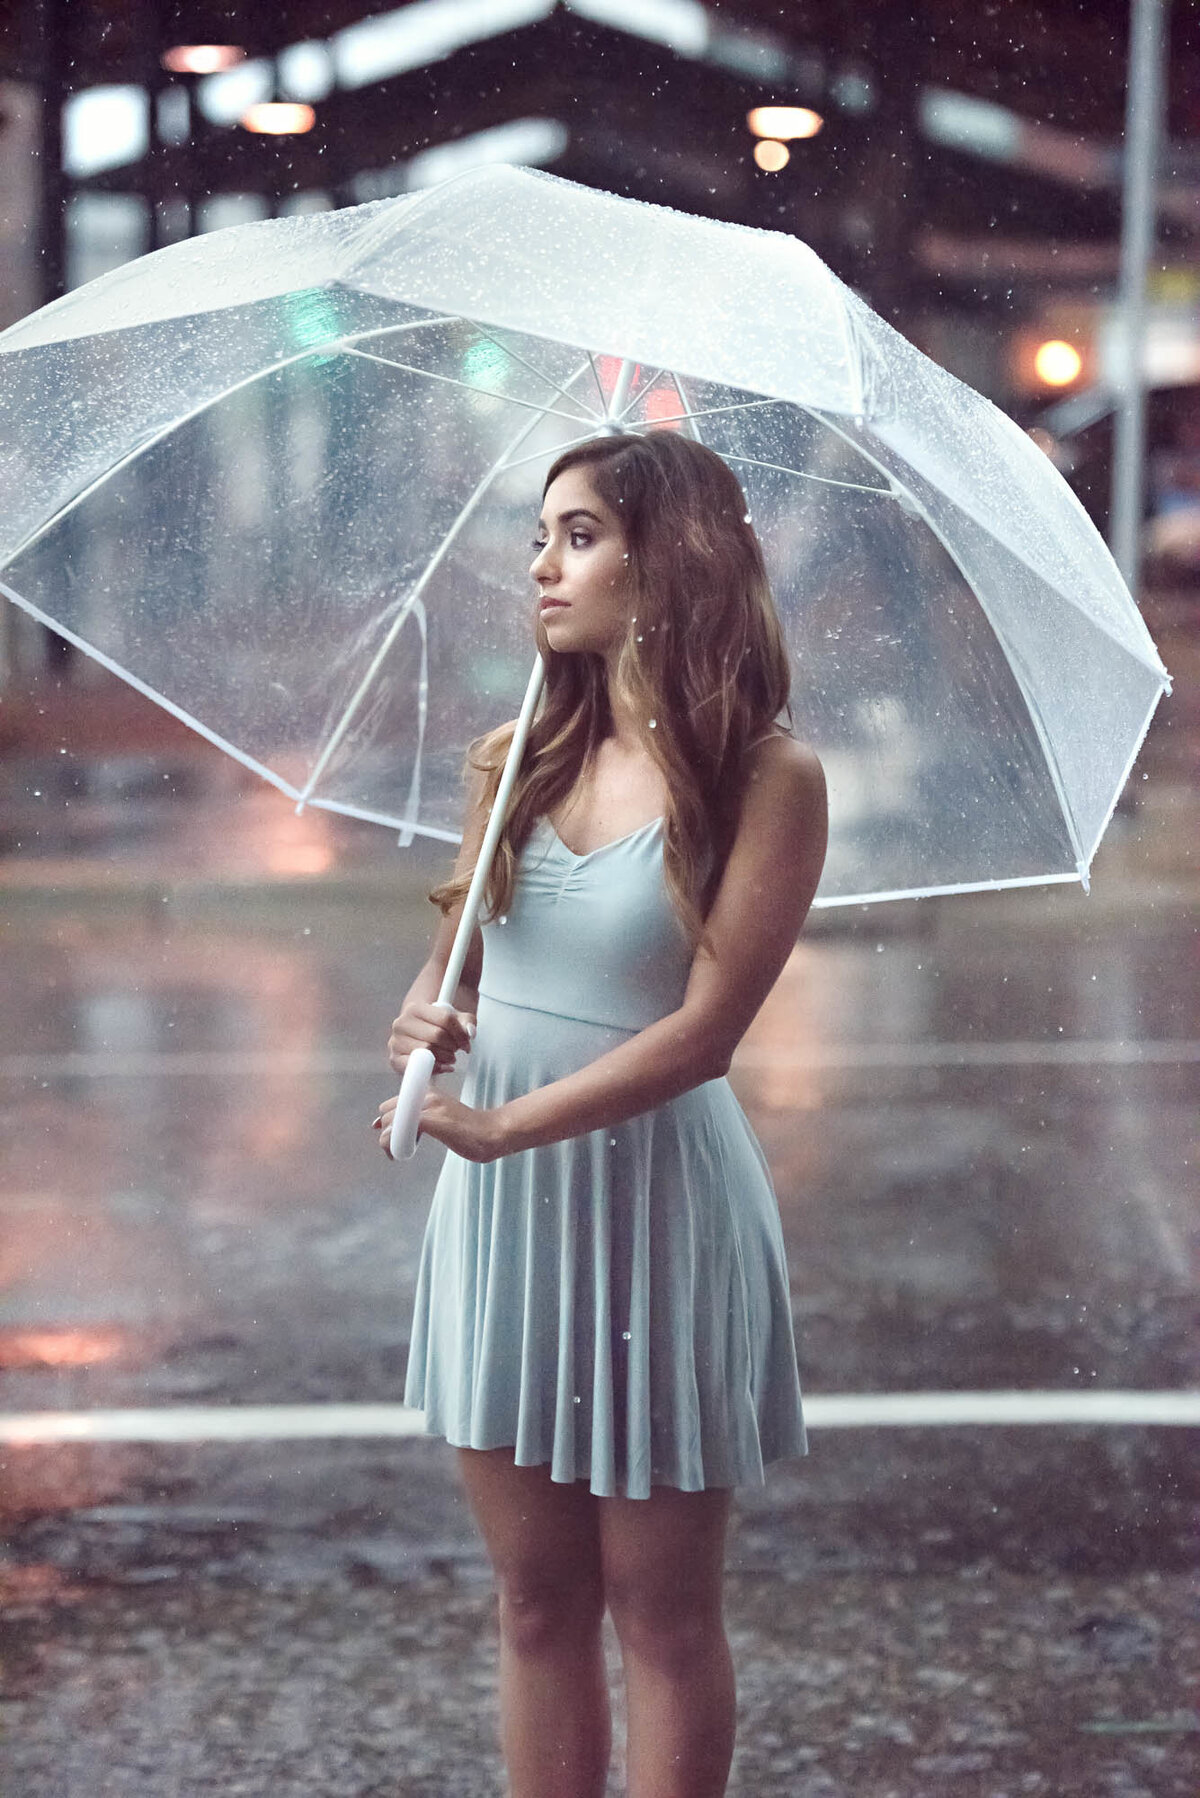 Senior portrait with umbrella in the rain